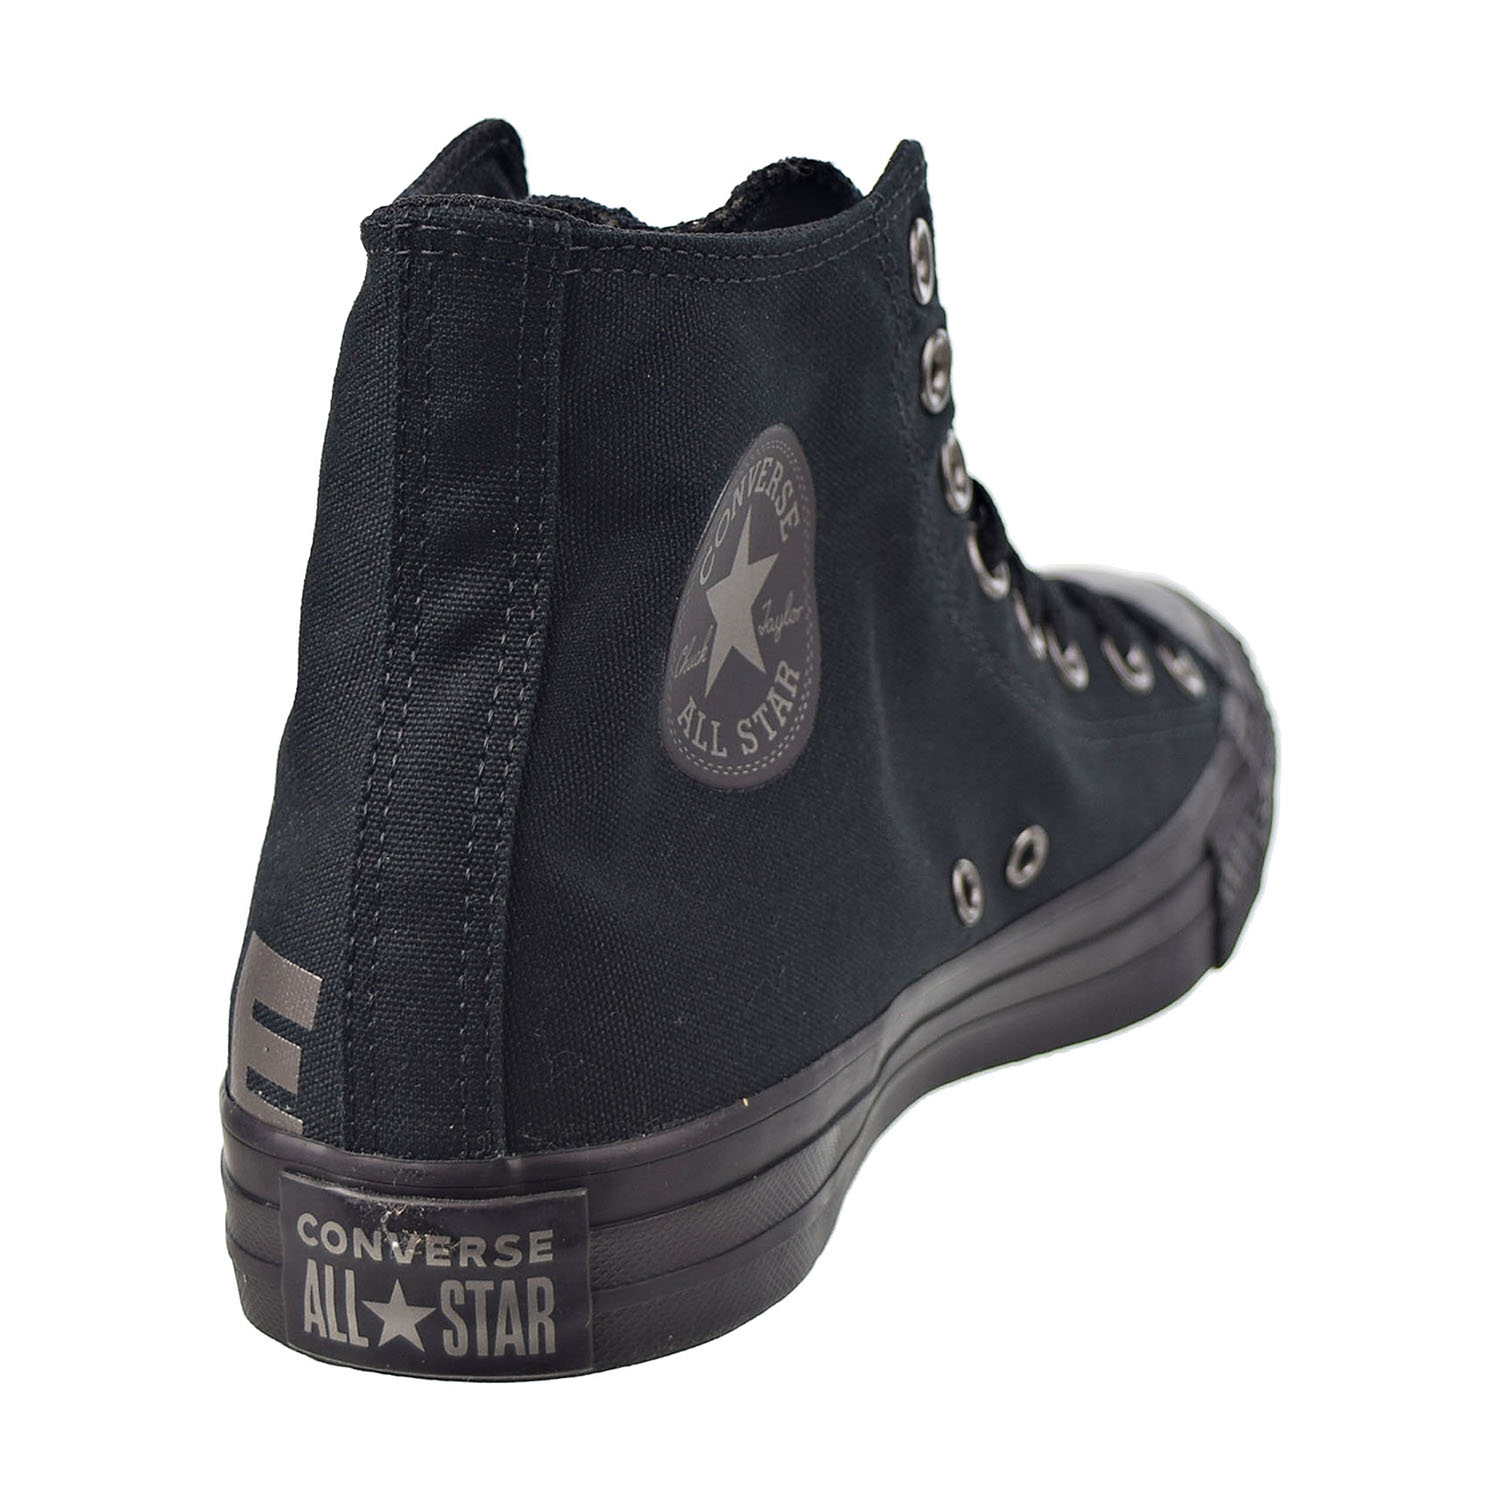 Converse Chuck Taylor All Star Hi Wordmark 2.0 Men's Shoes Black-Gunmetal-Black 165429f - image 3 of 6